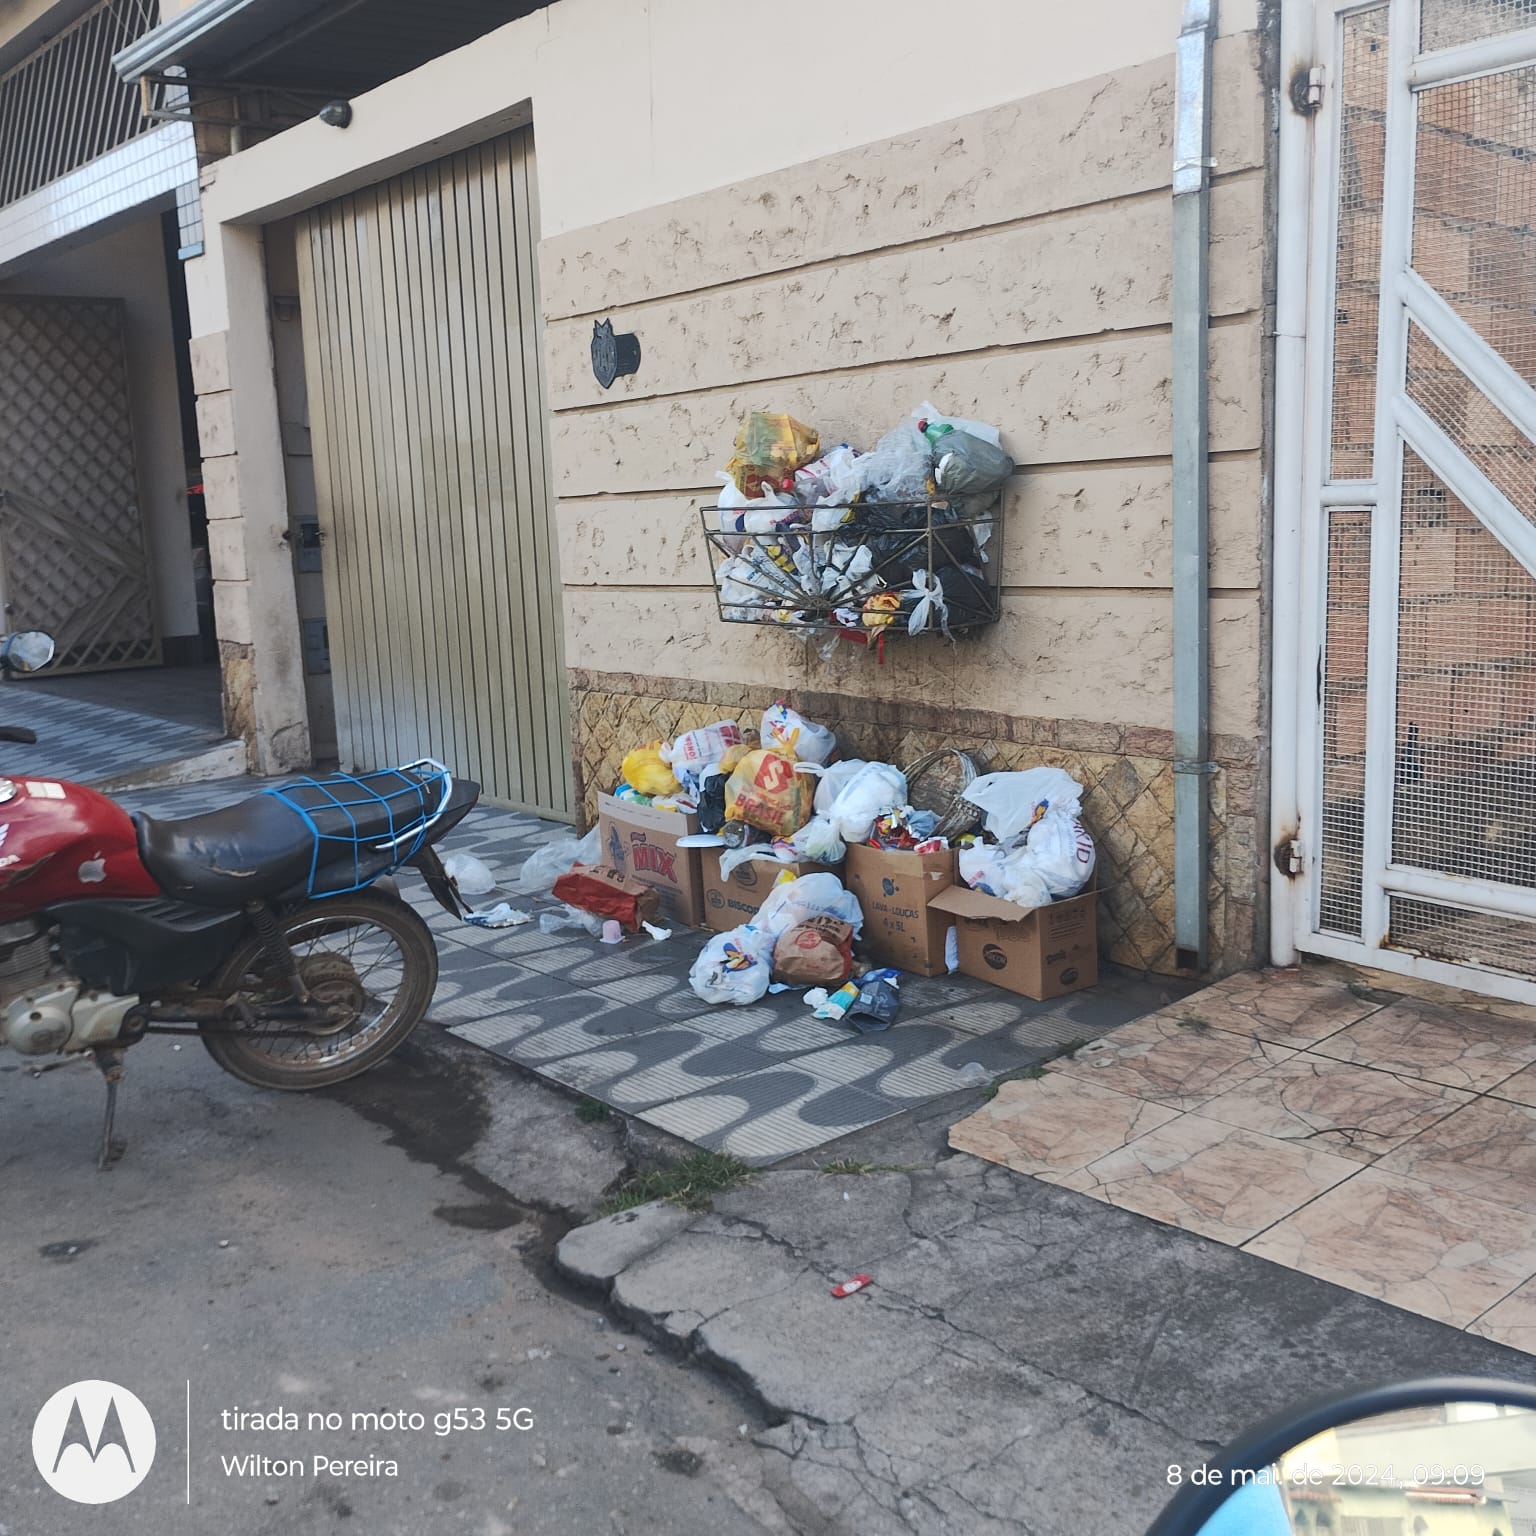 CIDADE IMUNDA: moradores relaram descaso da coleta de lixo e prefeitura informa que notificou empresa